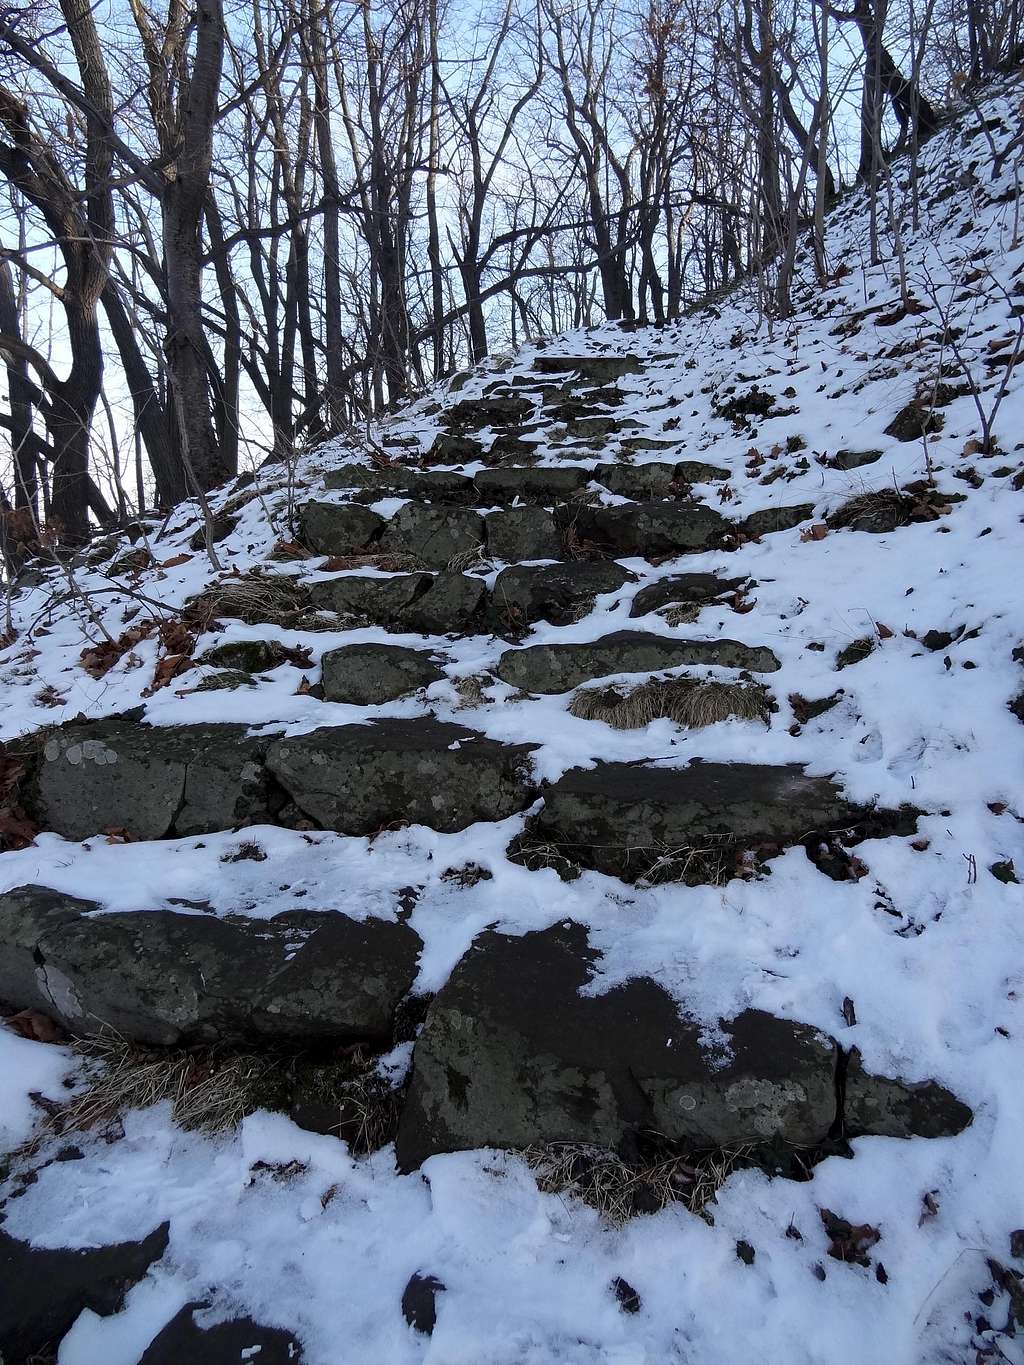 The stairs to Ostrzyca